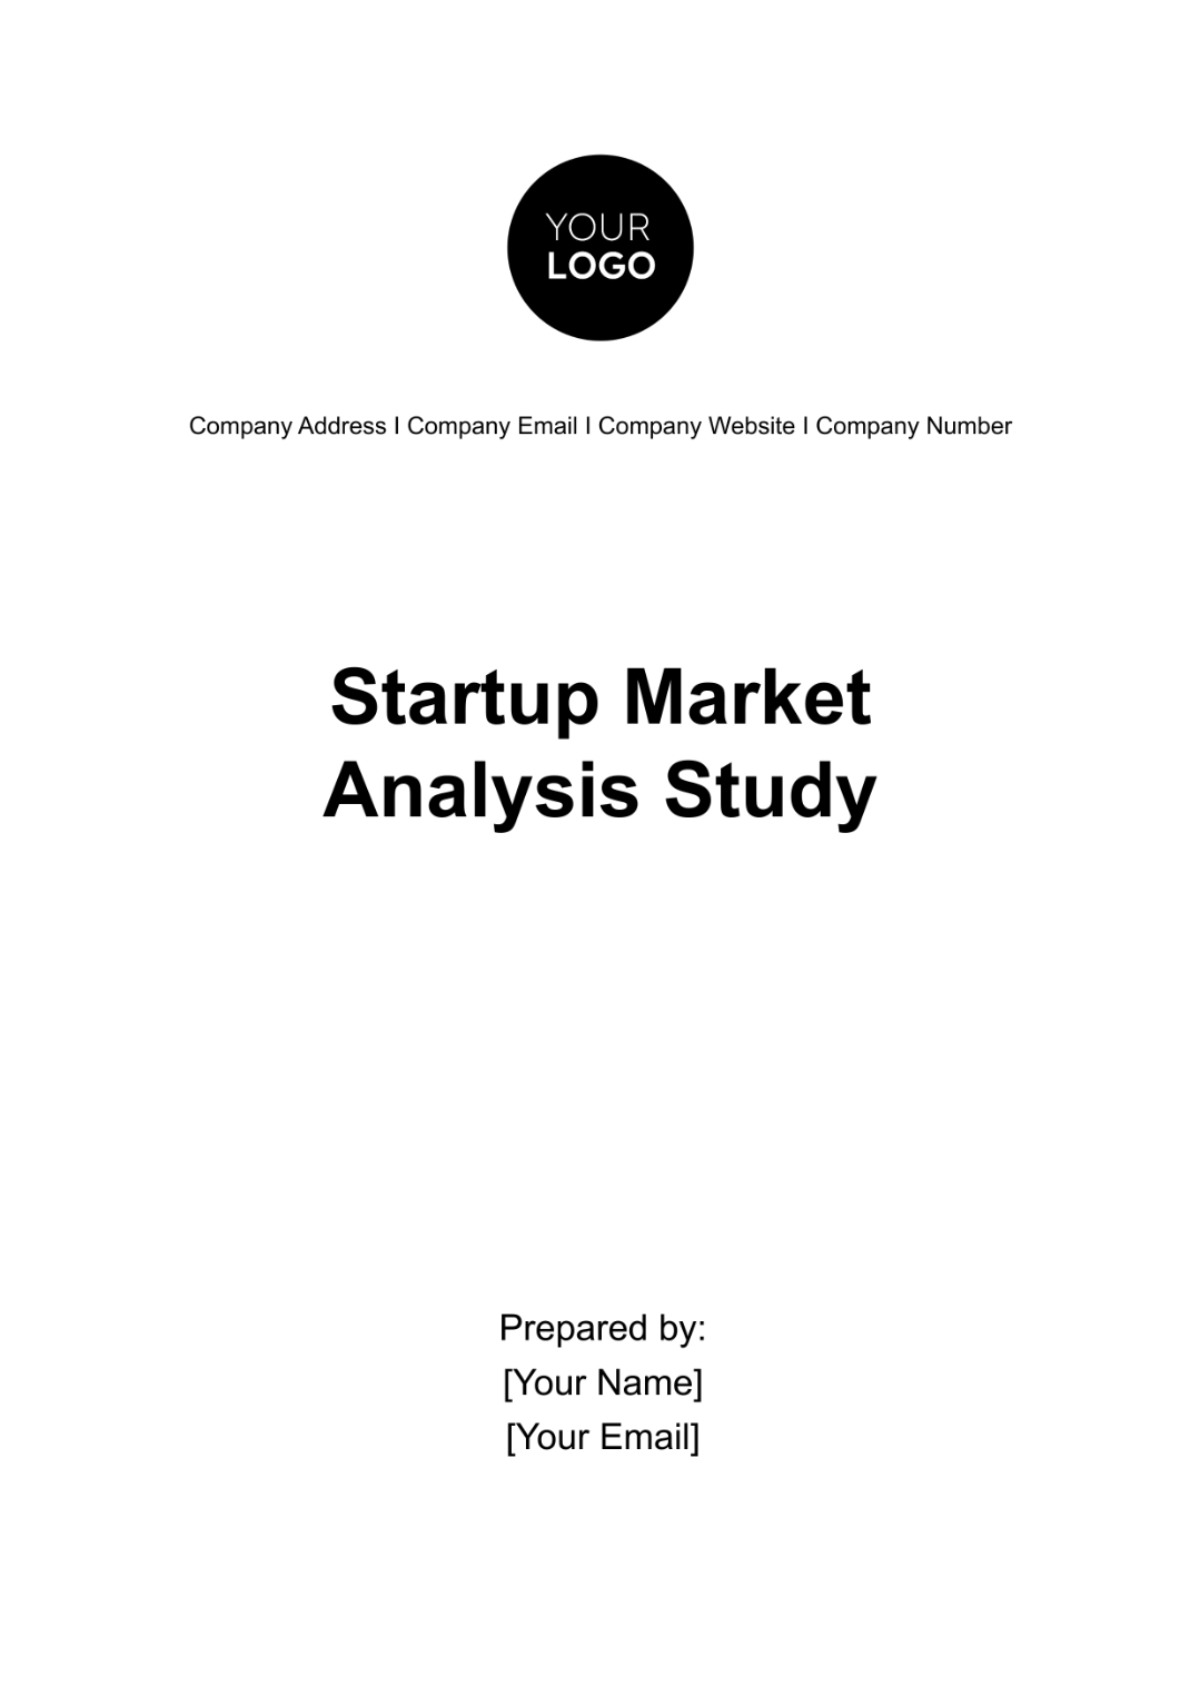 Startup Market Analysis Study Template